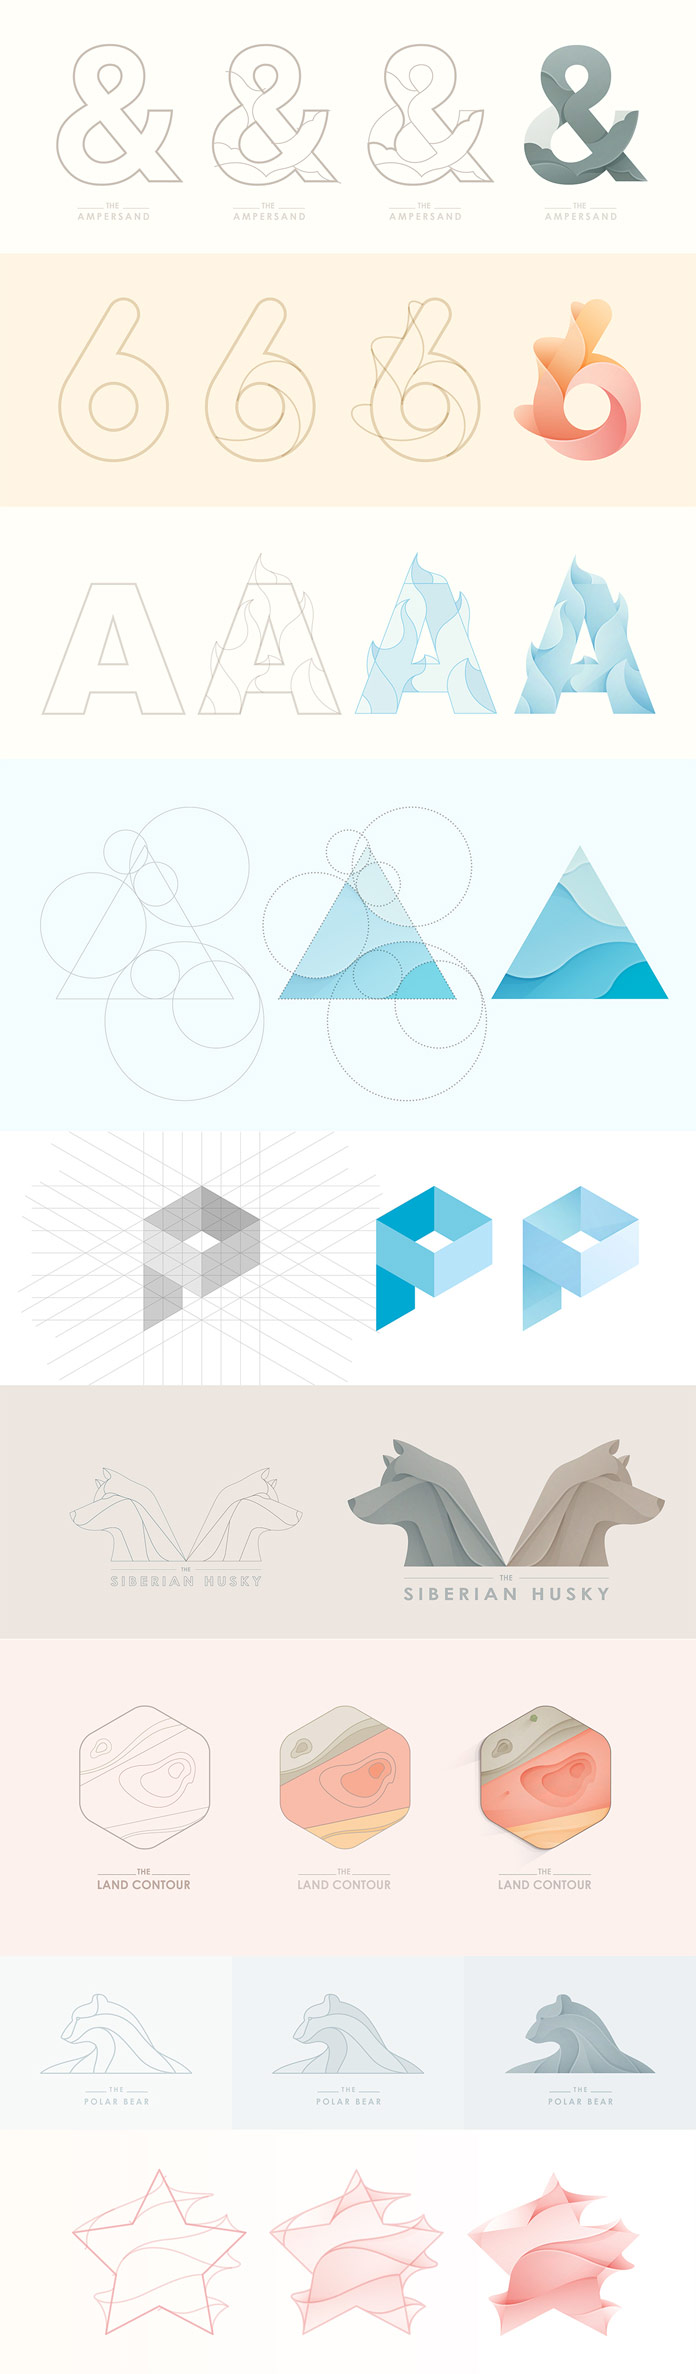 Logo designs - process case studies by Yoga Perdana.